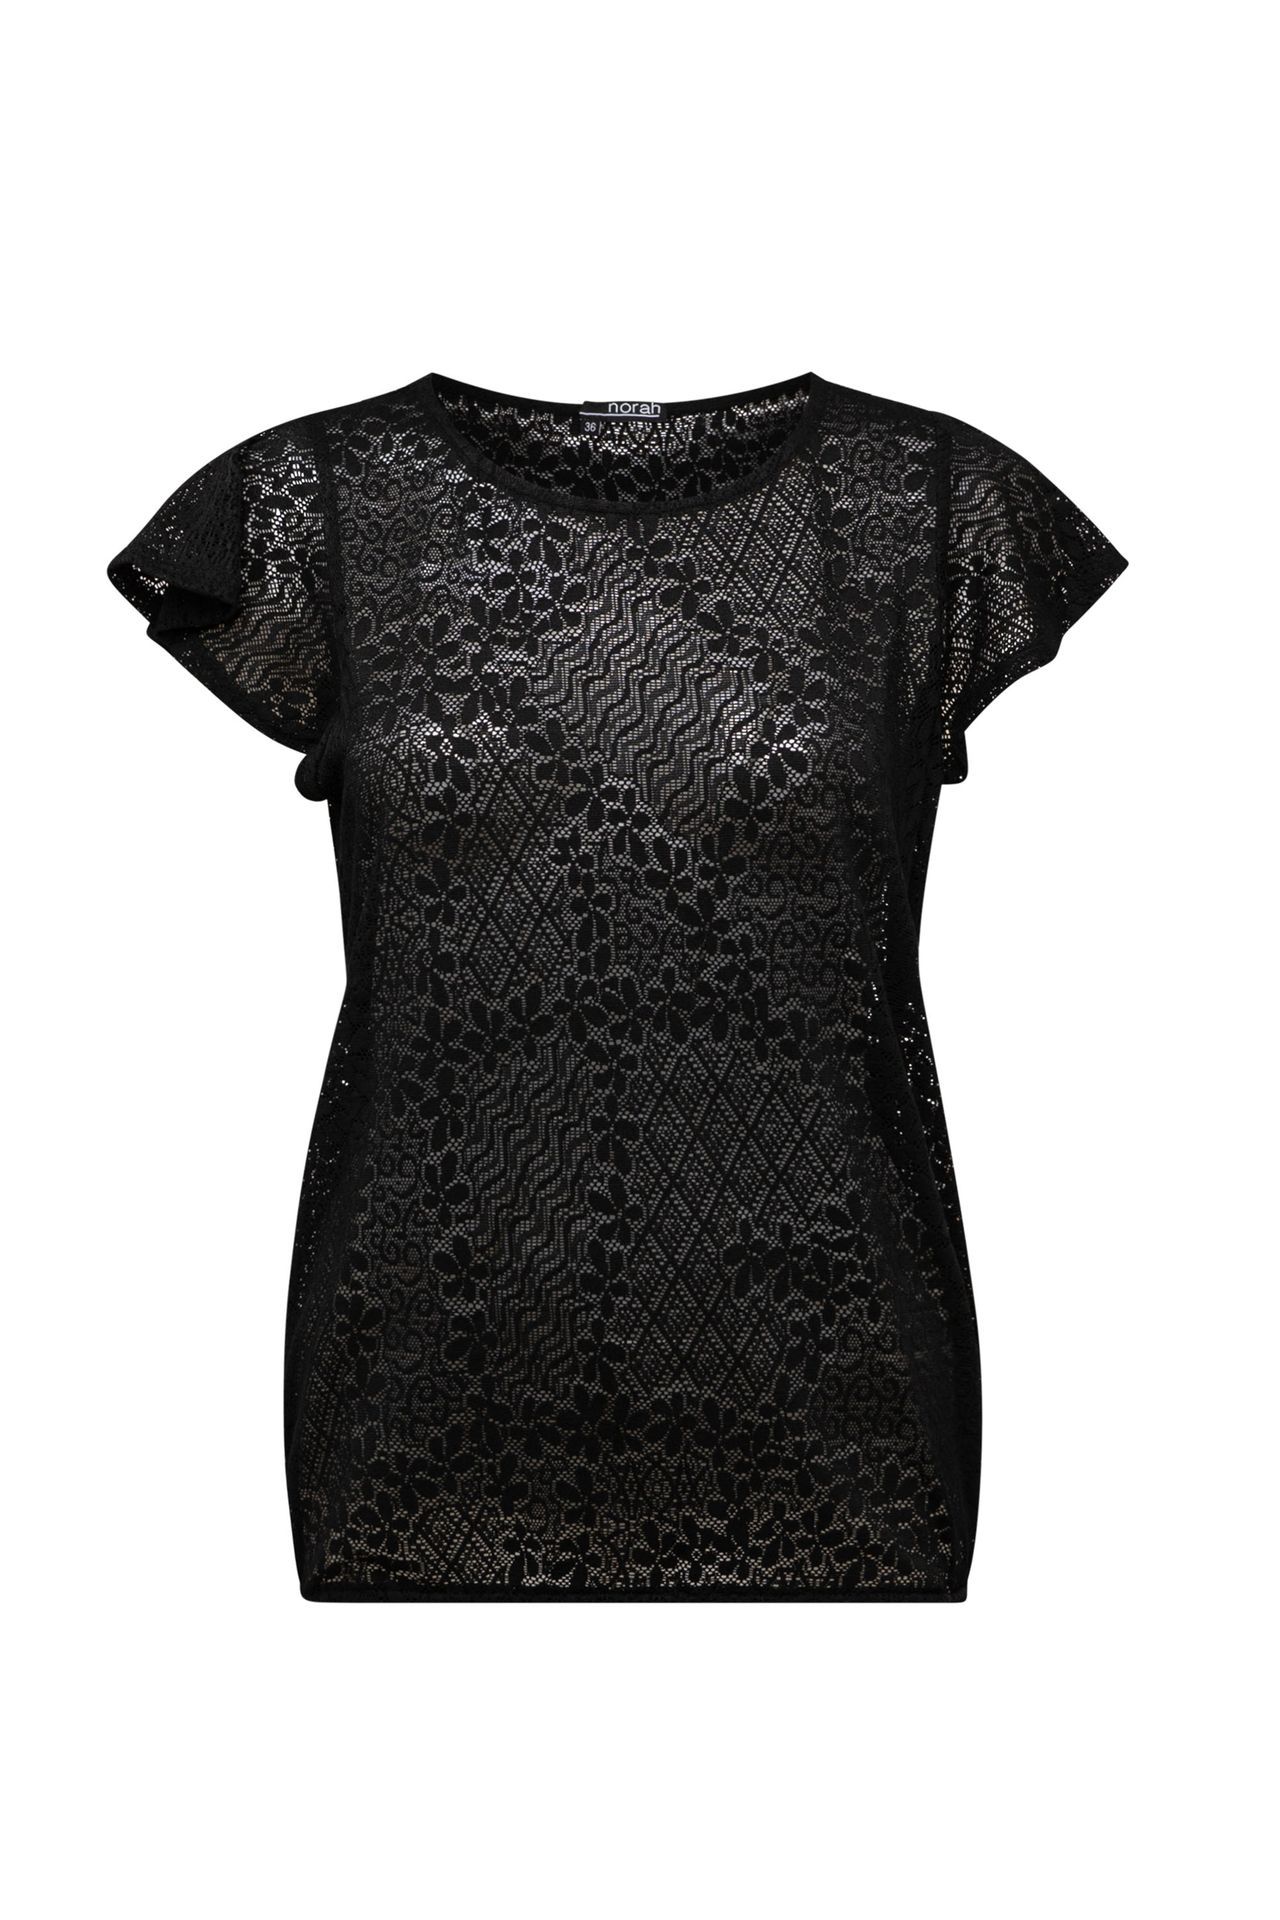 Norah Zwart shirt black 213613-001